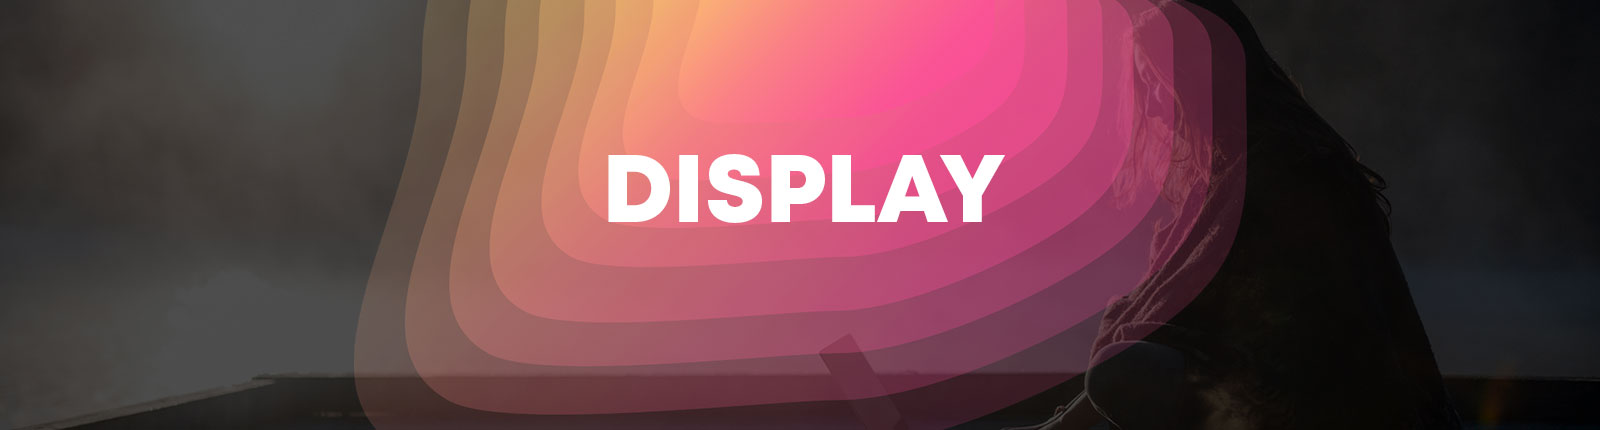 display_header